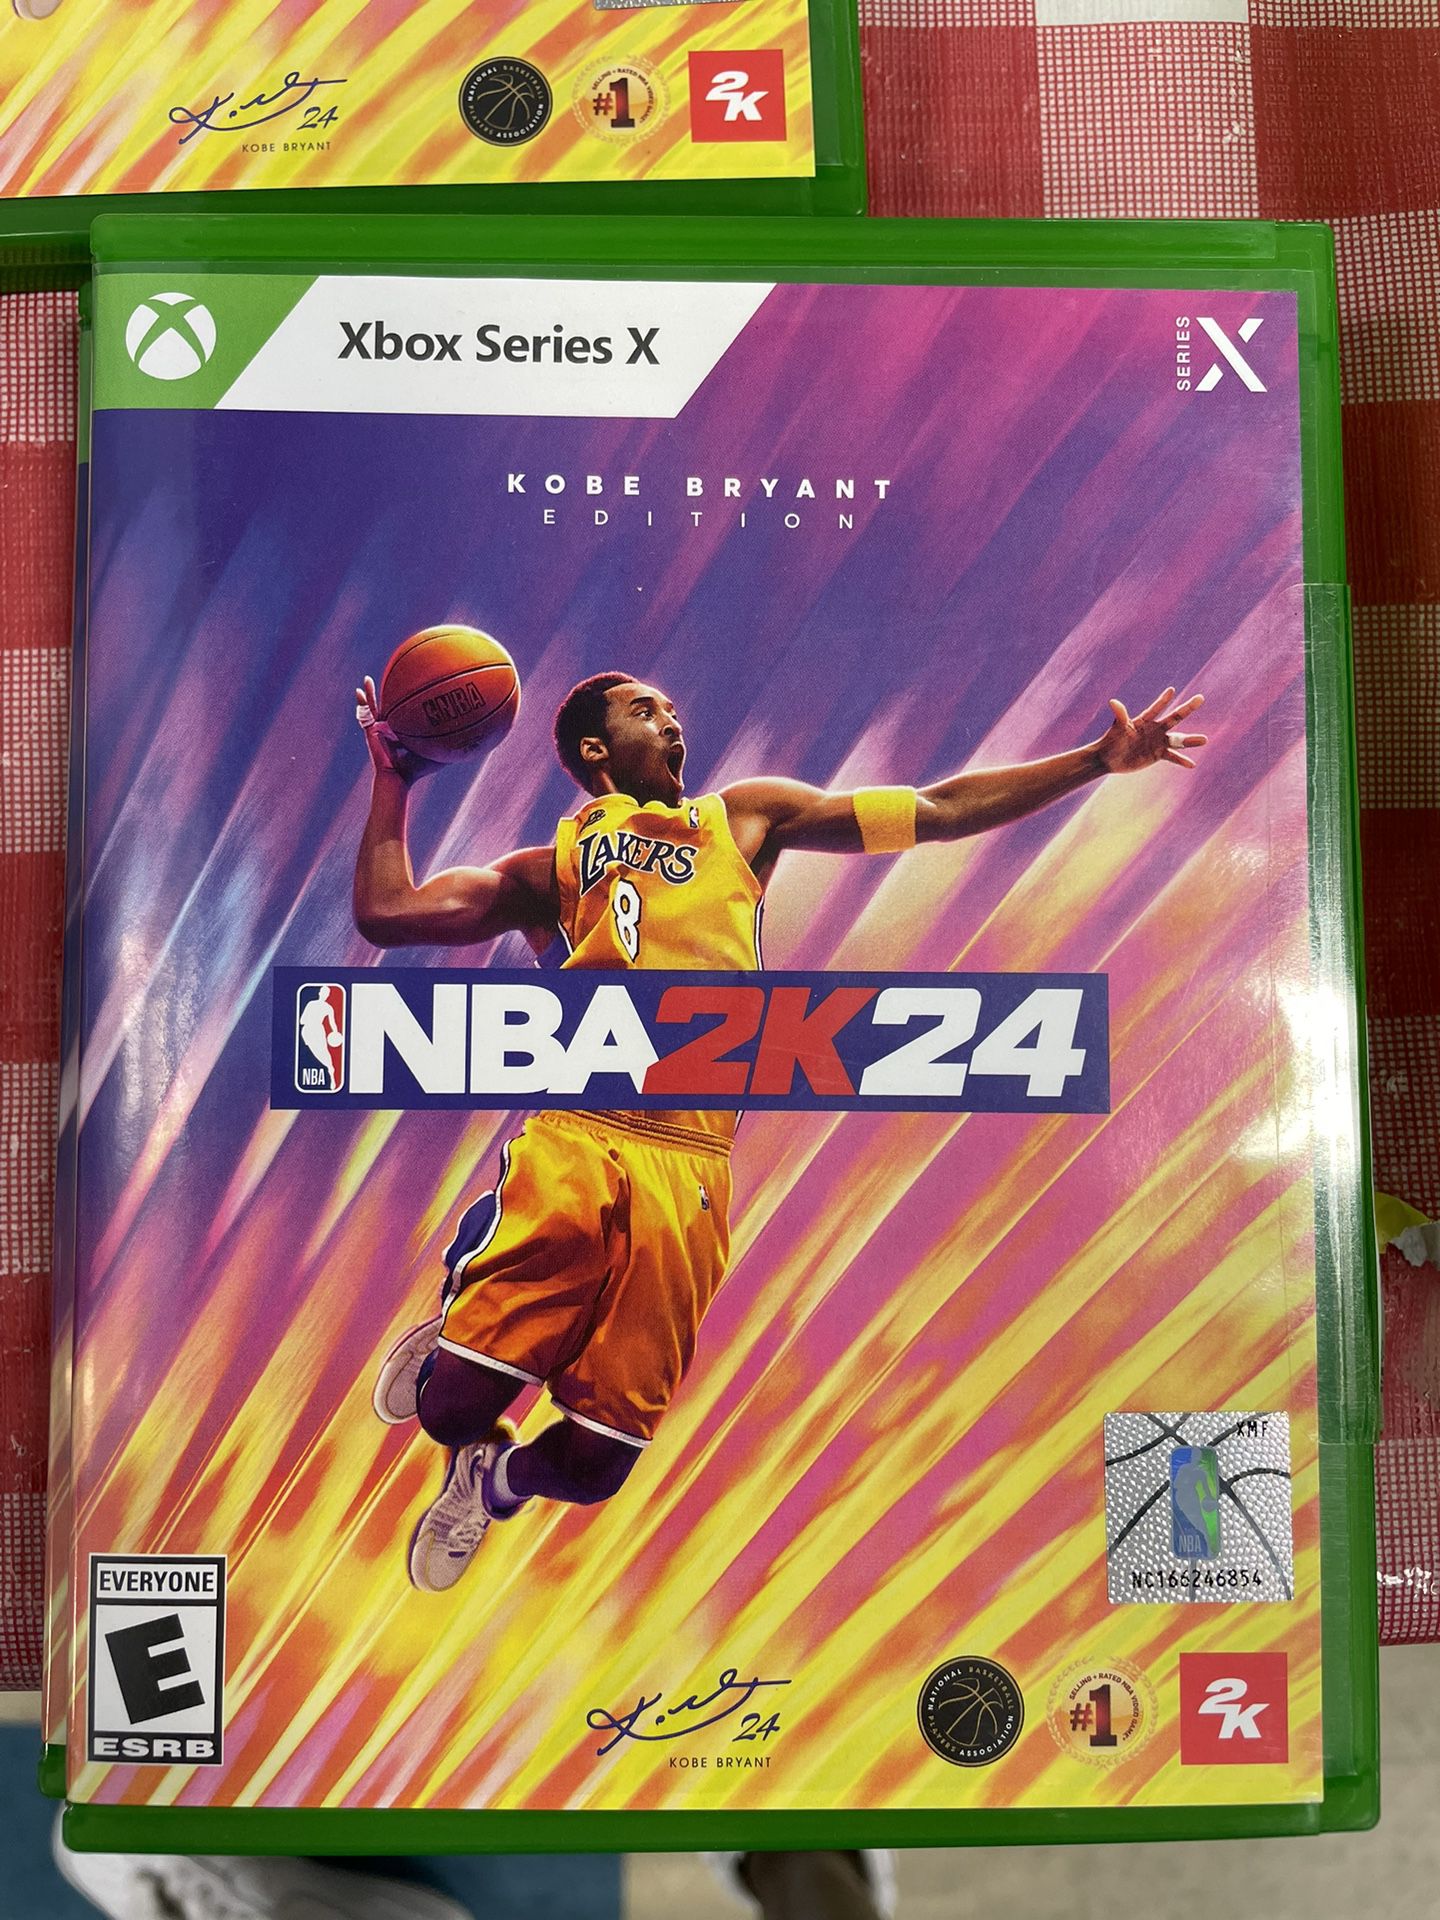 BRAND NEW 2k24 For Xbox Series X Kobe Bryant Edition